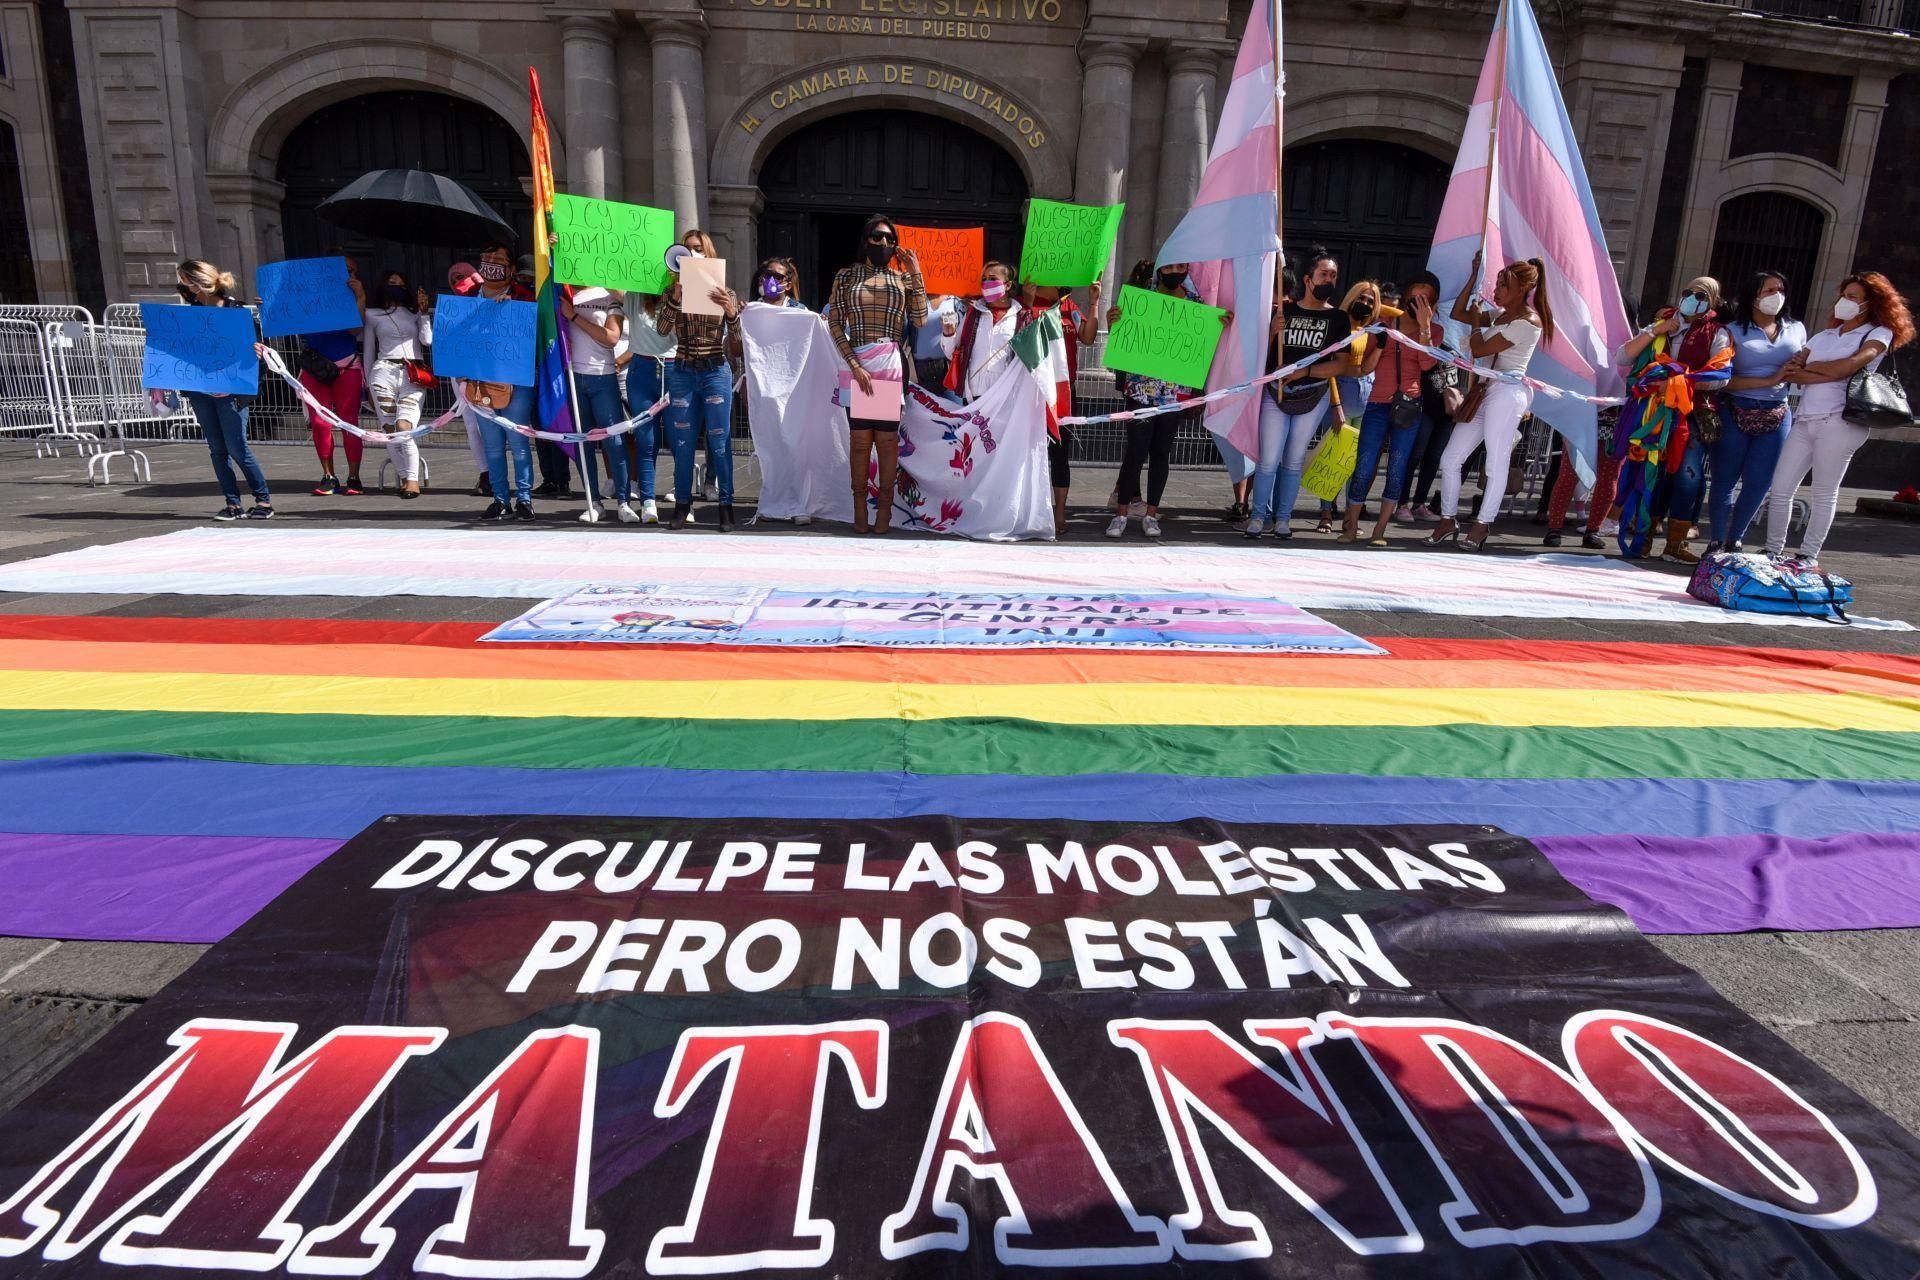 En una semana, matan a tres mujeres trans en Colima, Tijuana y CDMX